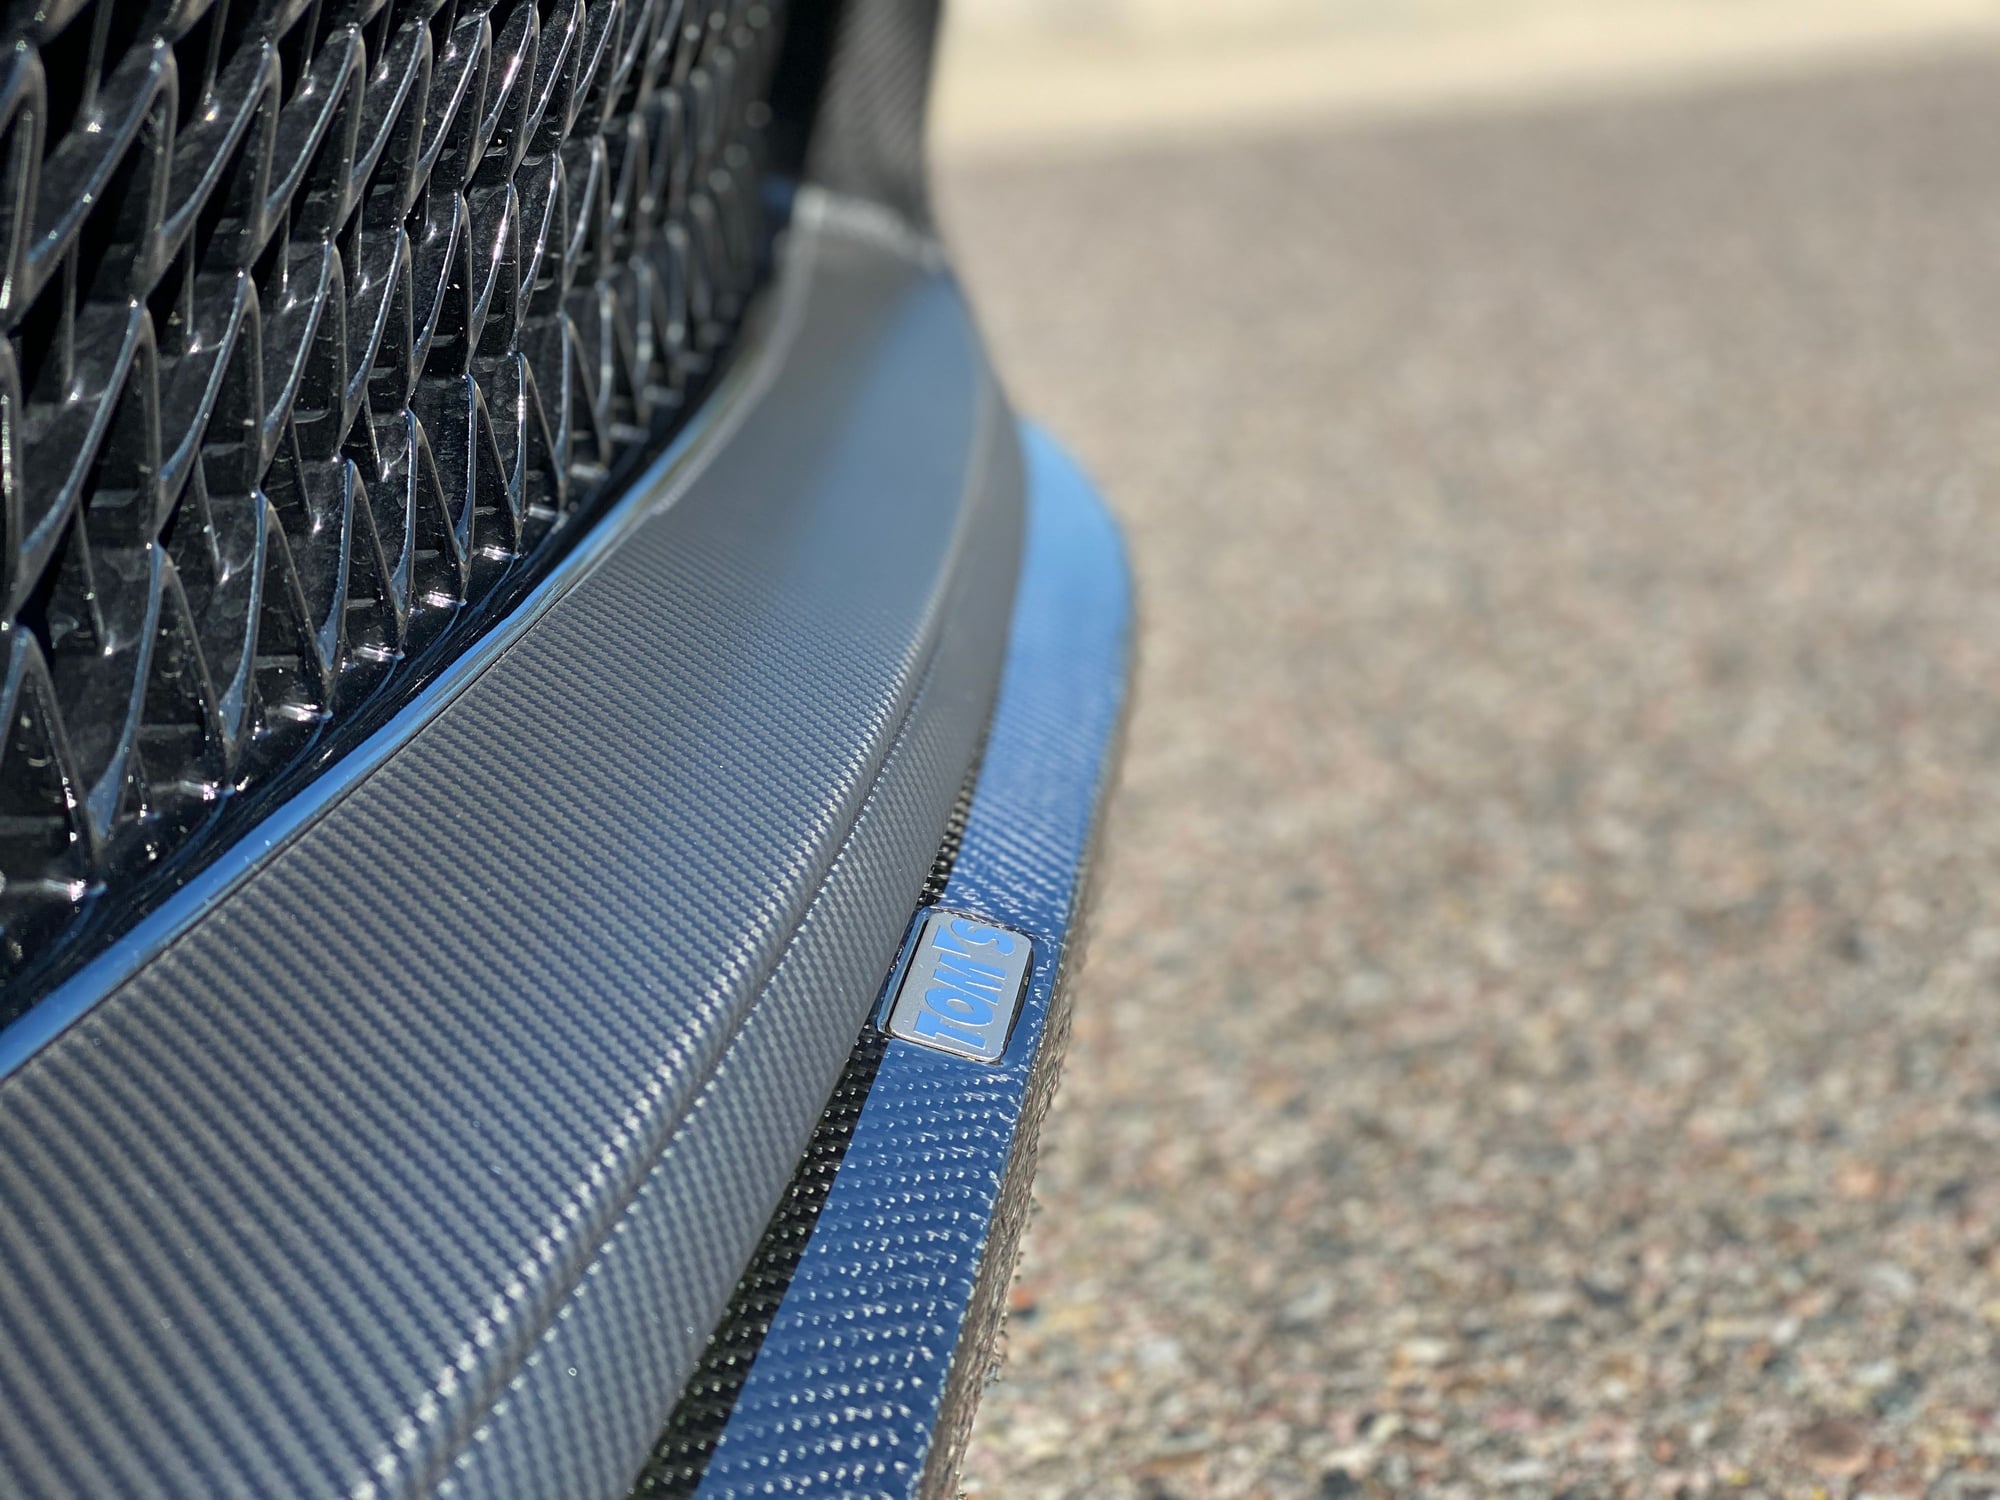 2018 Lexus LC500 - Tom's Carbon Aero Kit + Seibon Carbon Fiber Hood + 21" Carbon Fiber Wheel w/tires - Phoenix, AZ 85022, United States